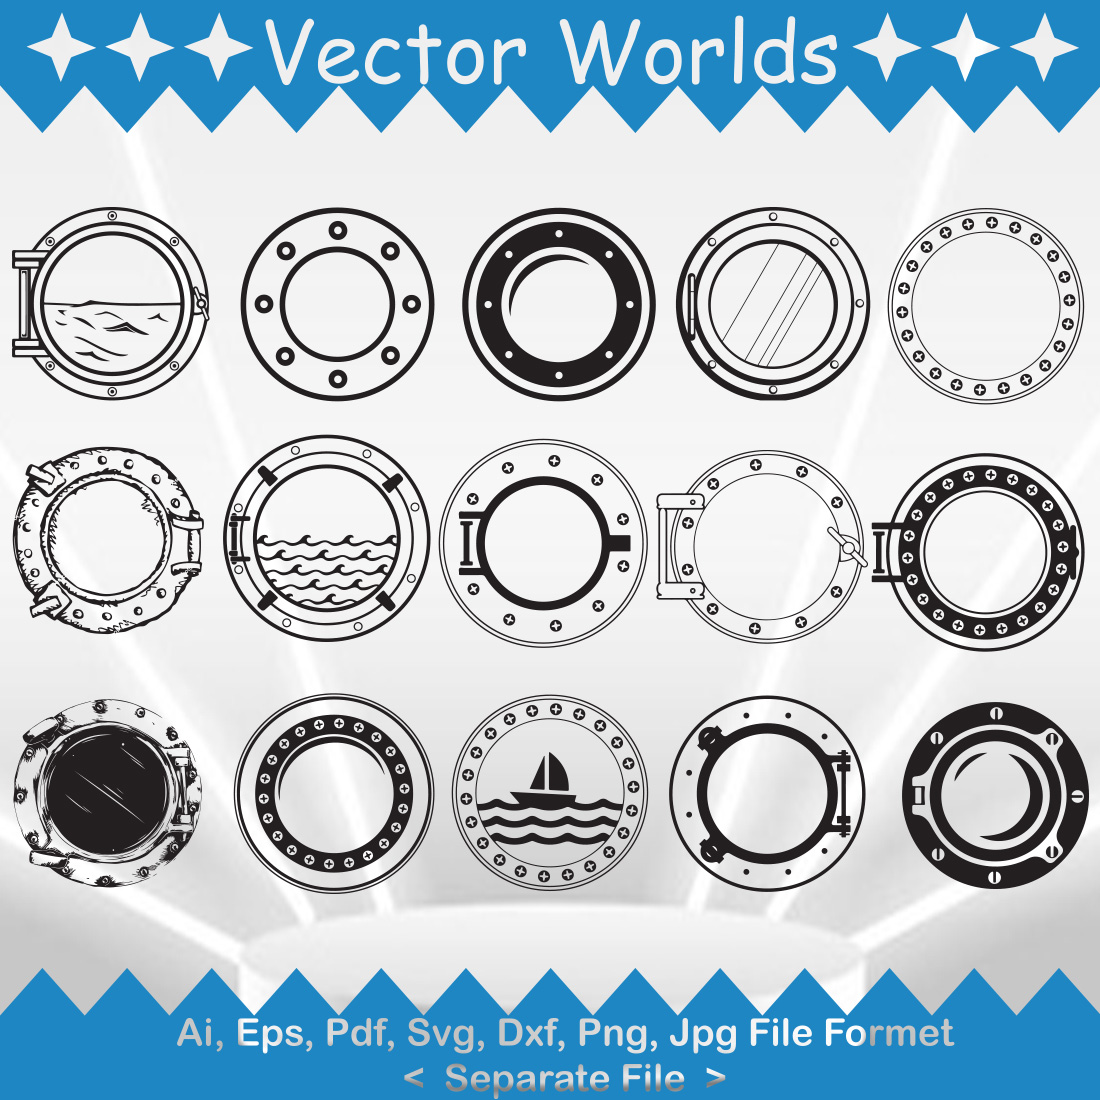 Porthole SVG Vector Design cover image.